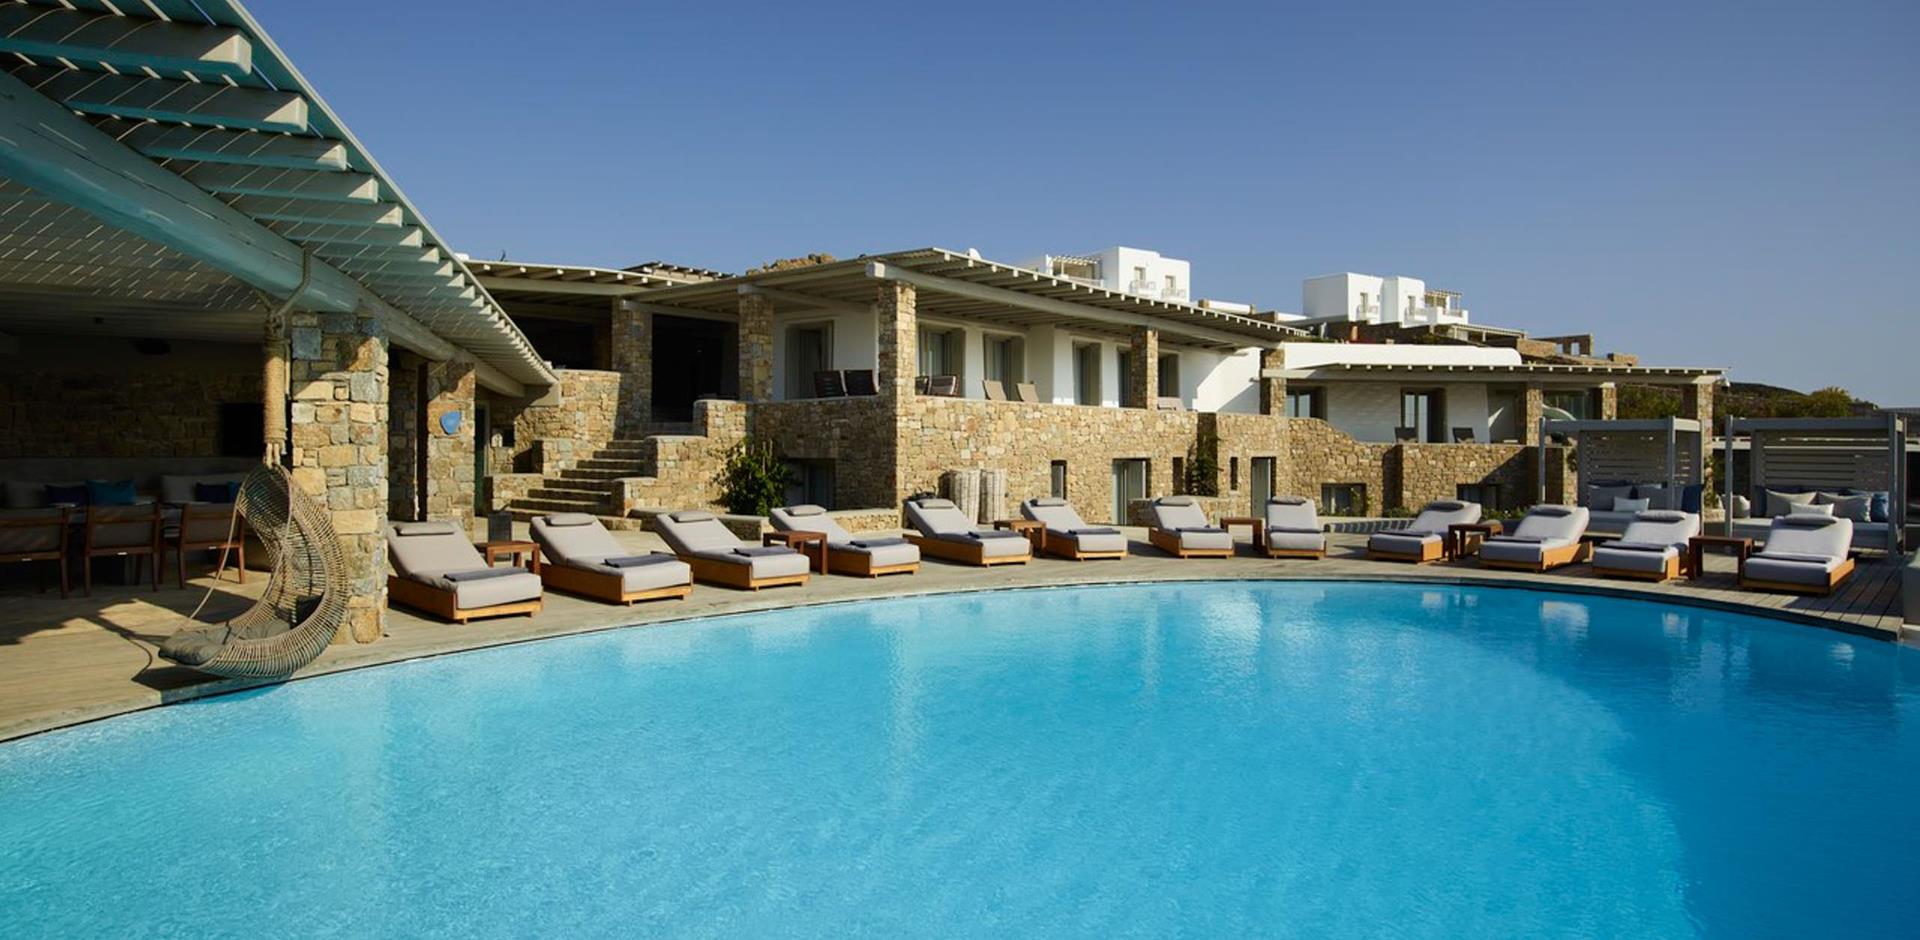 Pool area, Villa Cenon, Mykonos, Greece, Europe